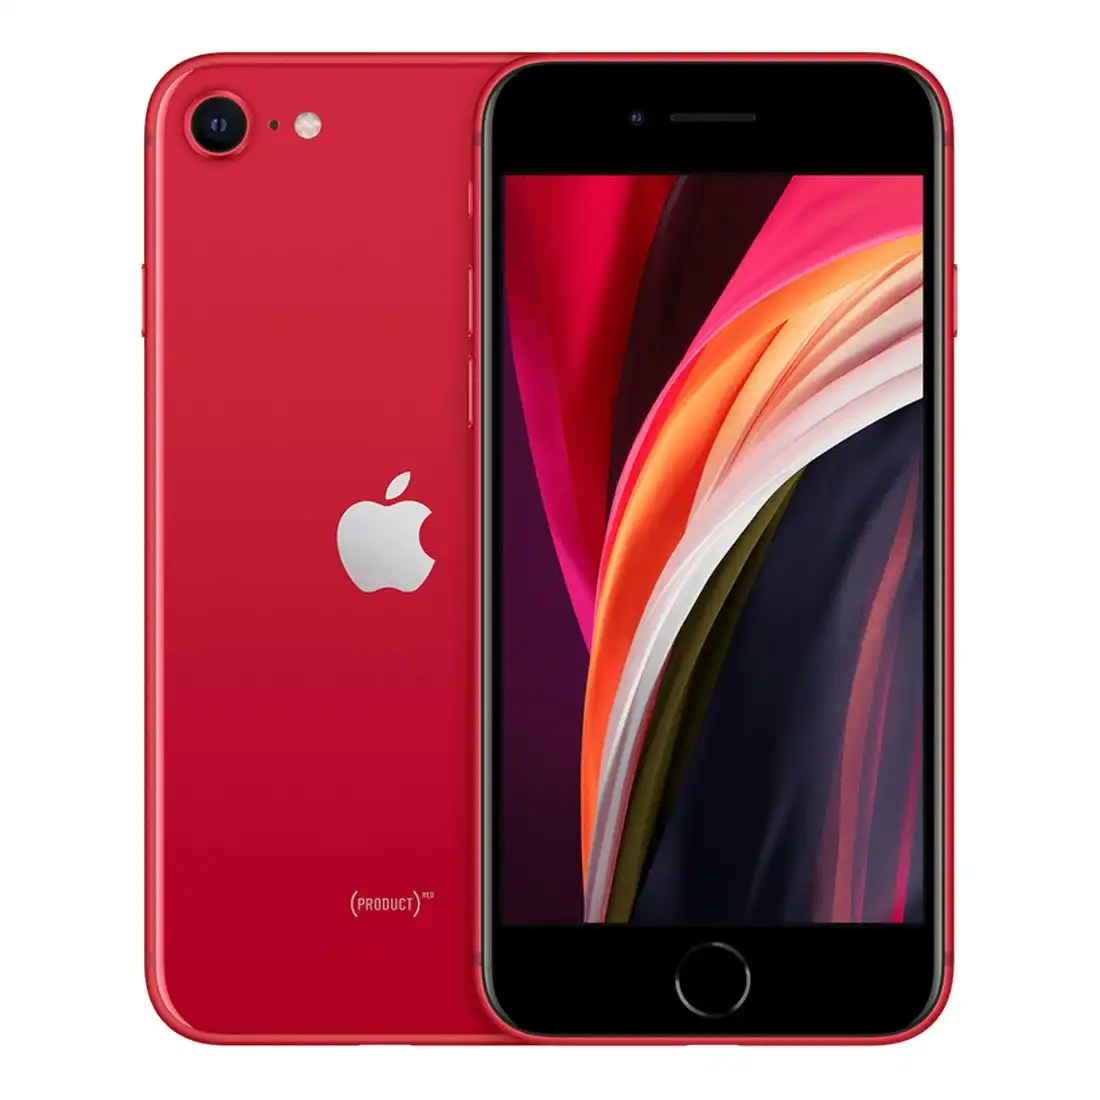 Apple iPhone SE (2nd Gen) 64GB Red [Refurbished] - Excellent